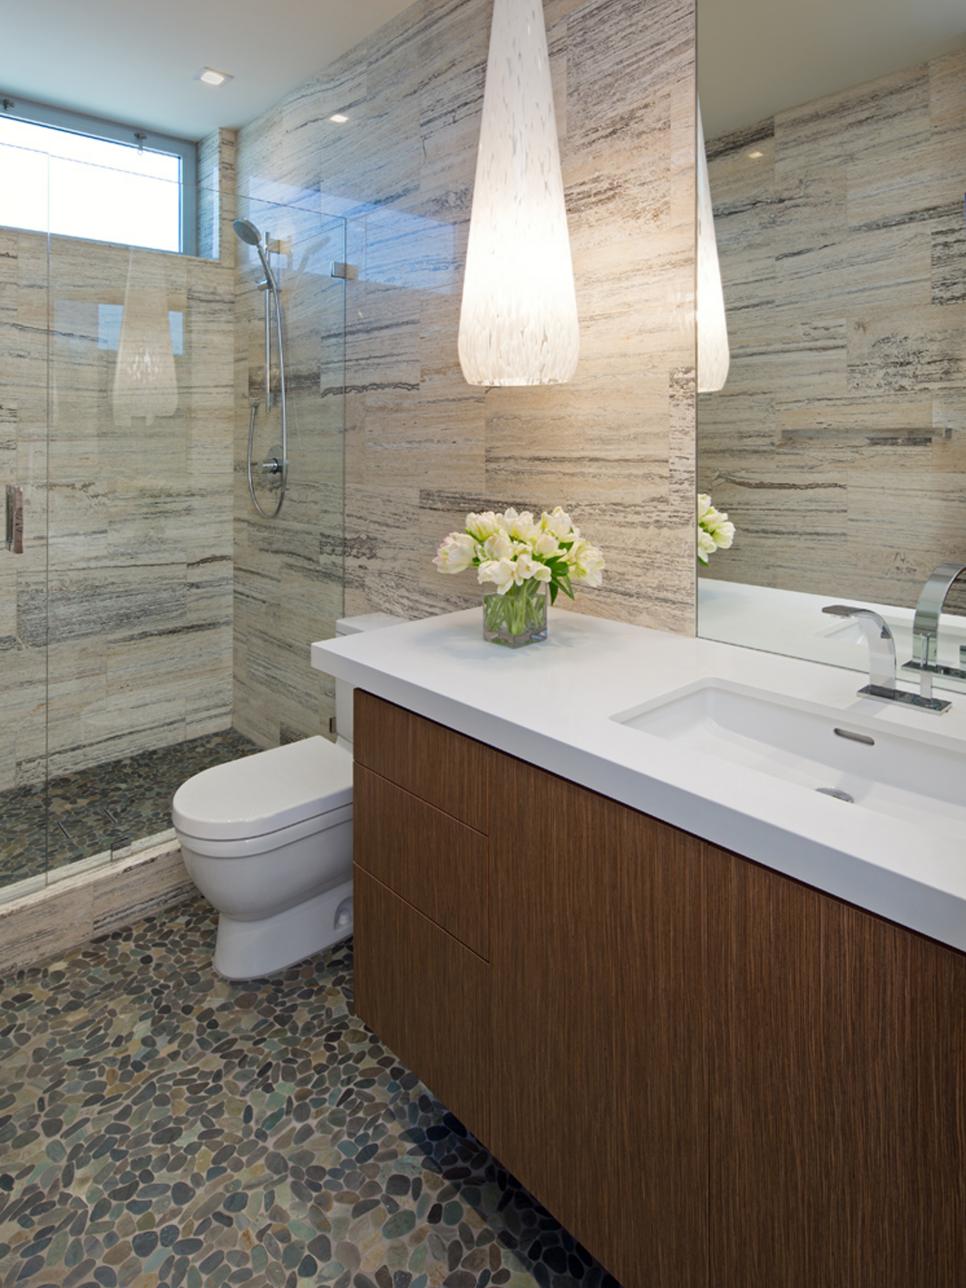 Neutral, Modern Bathroom with Standout Tile | HGTV